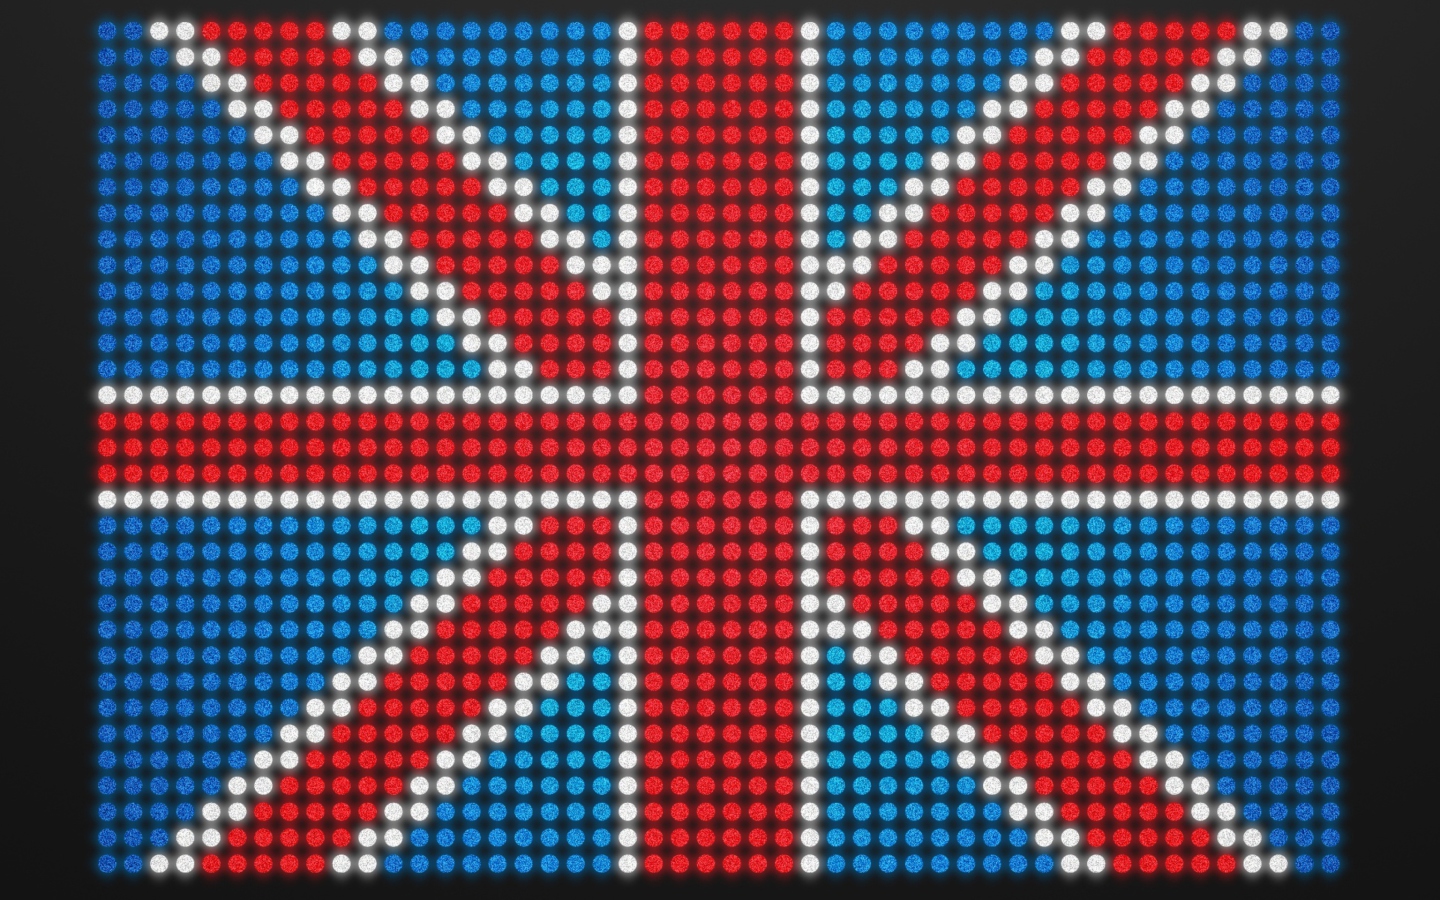 Das British Flag Wallpaper 1440x900